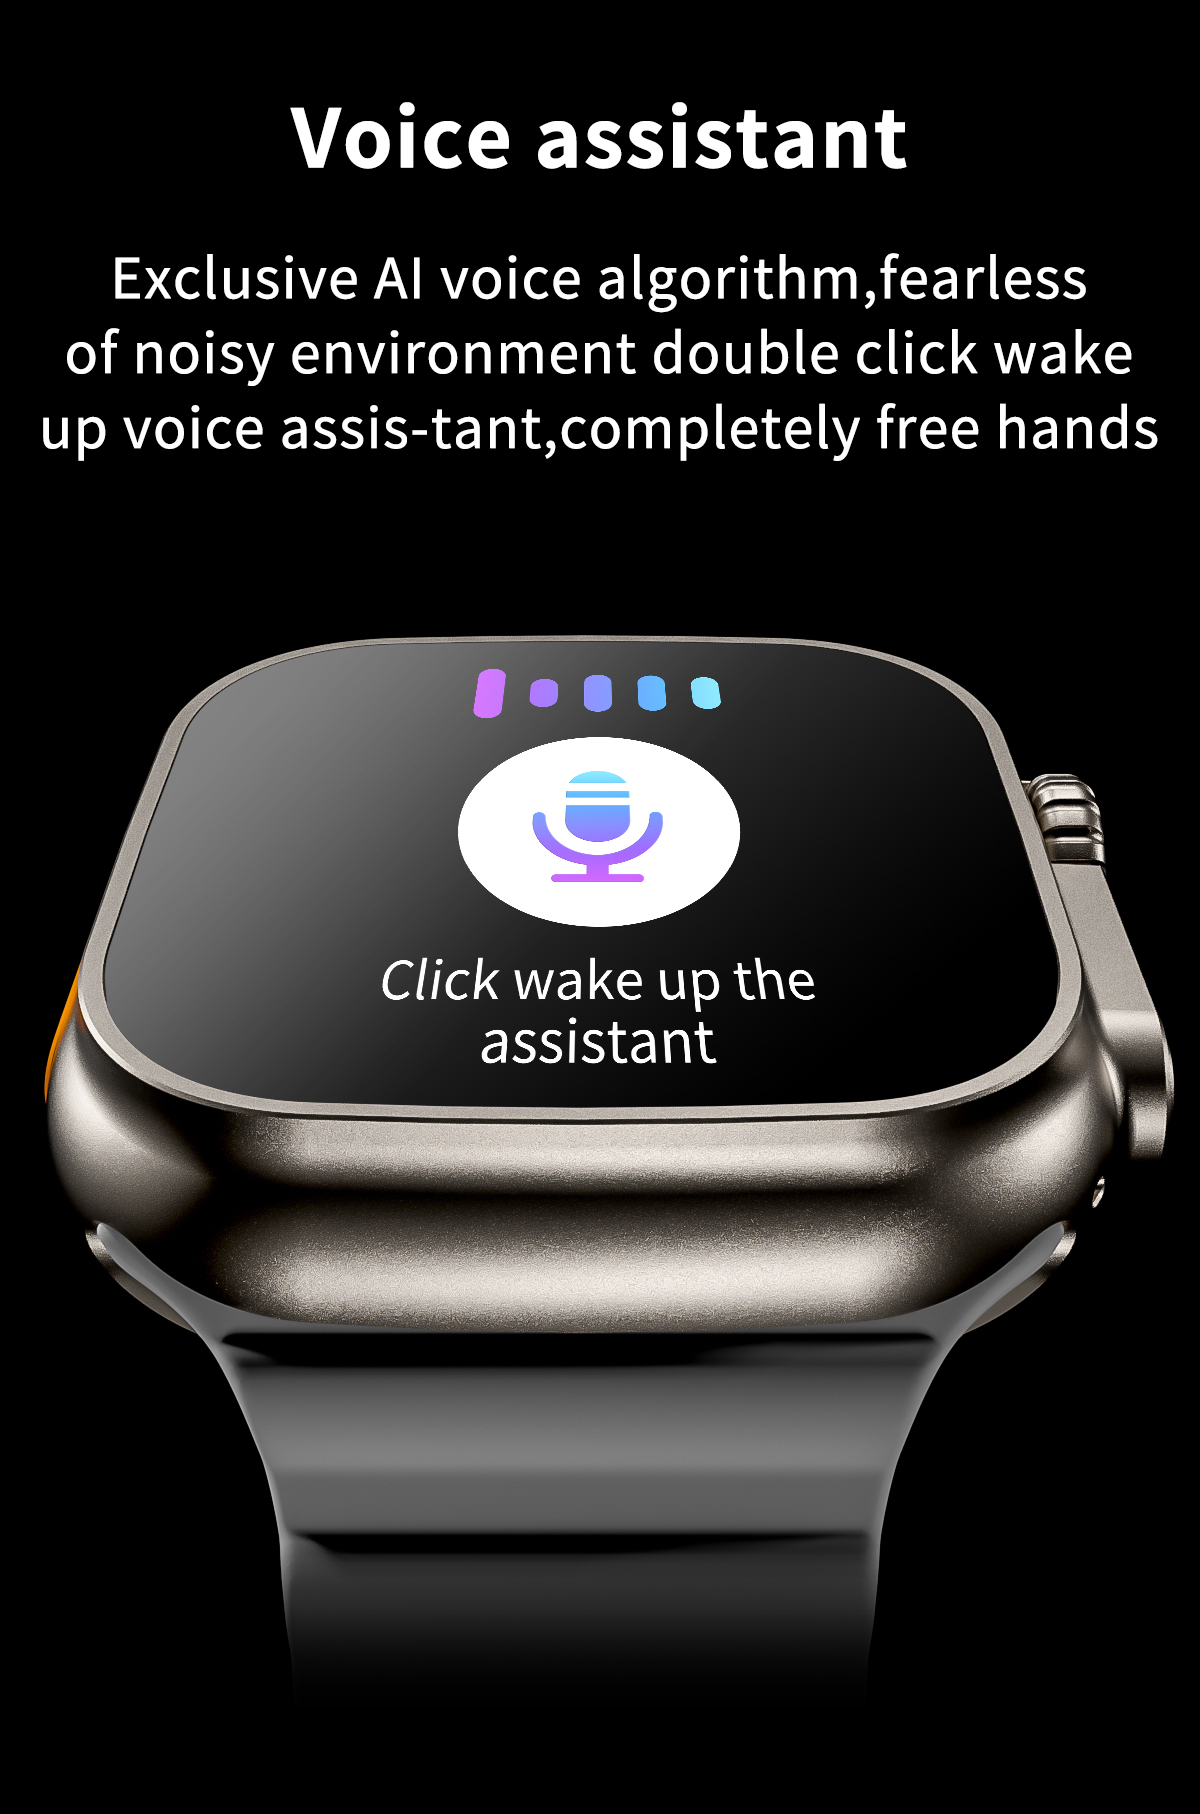 Reloj Inteligente Smart Watch Ultra A+ Naranja